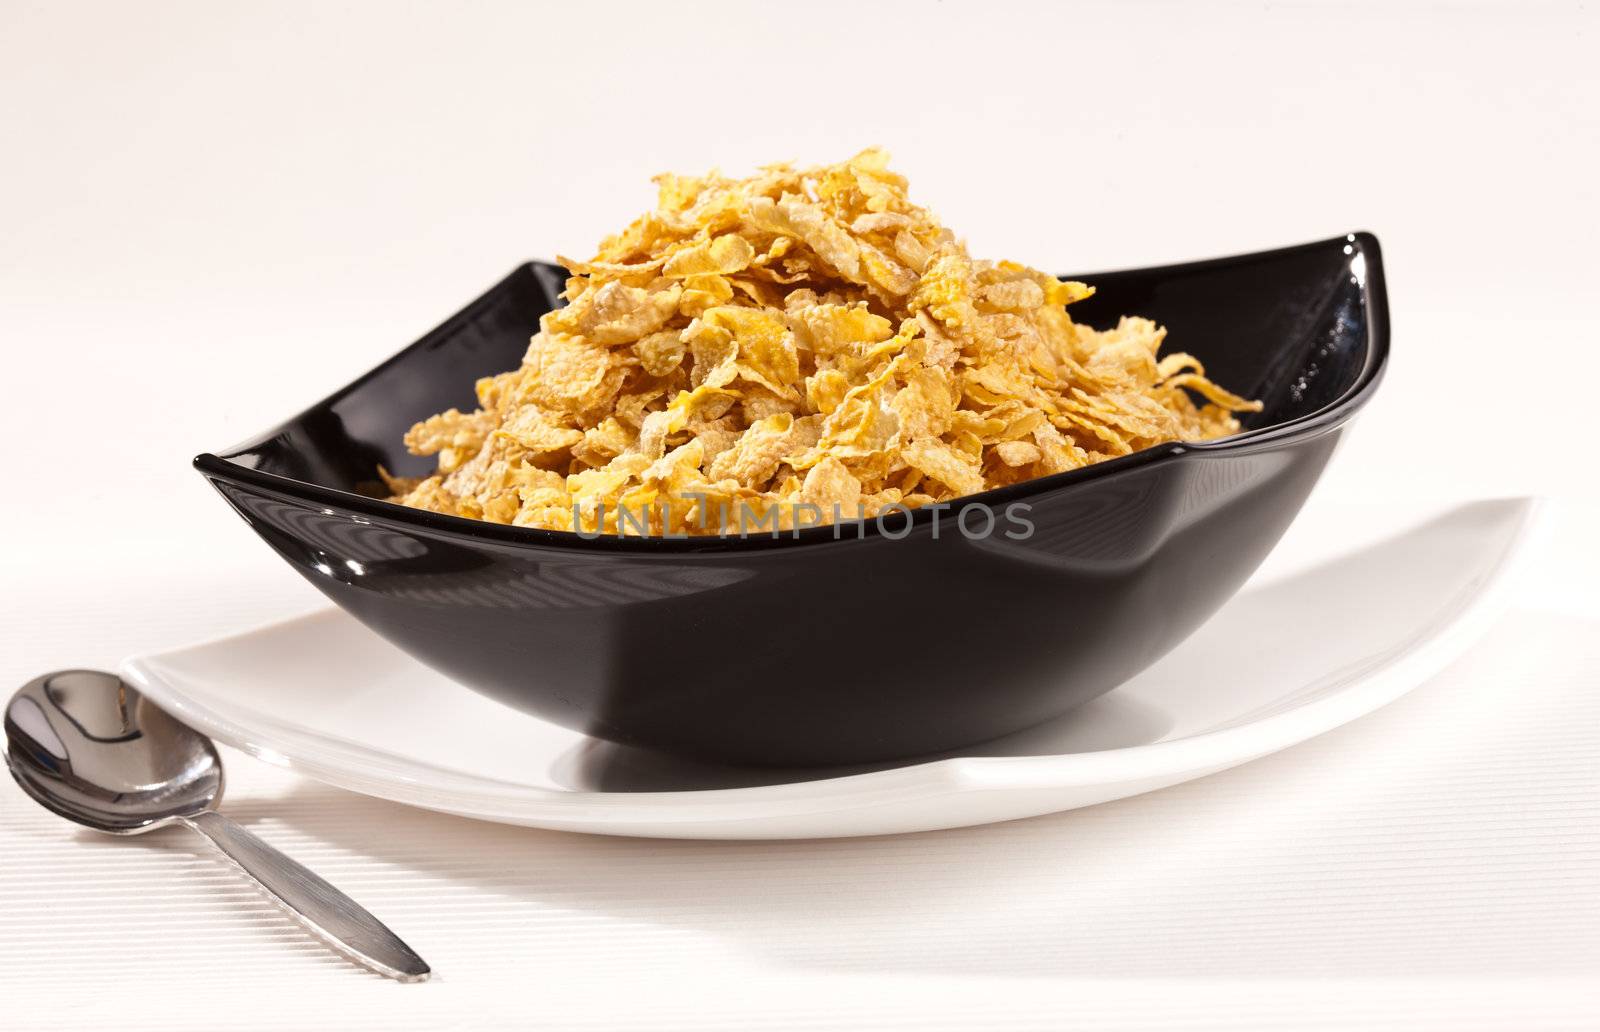 food series: tasty corn flakes in the black bowl